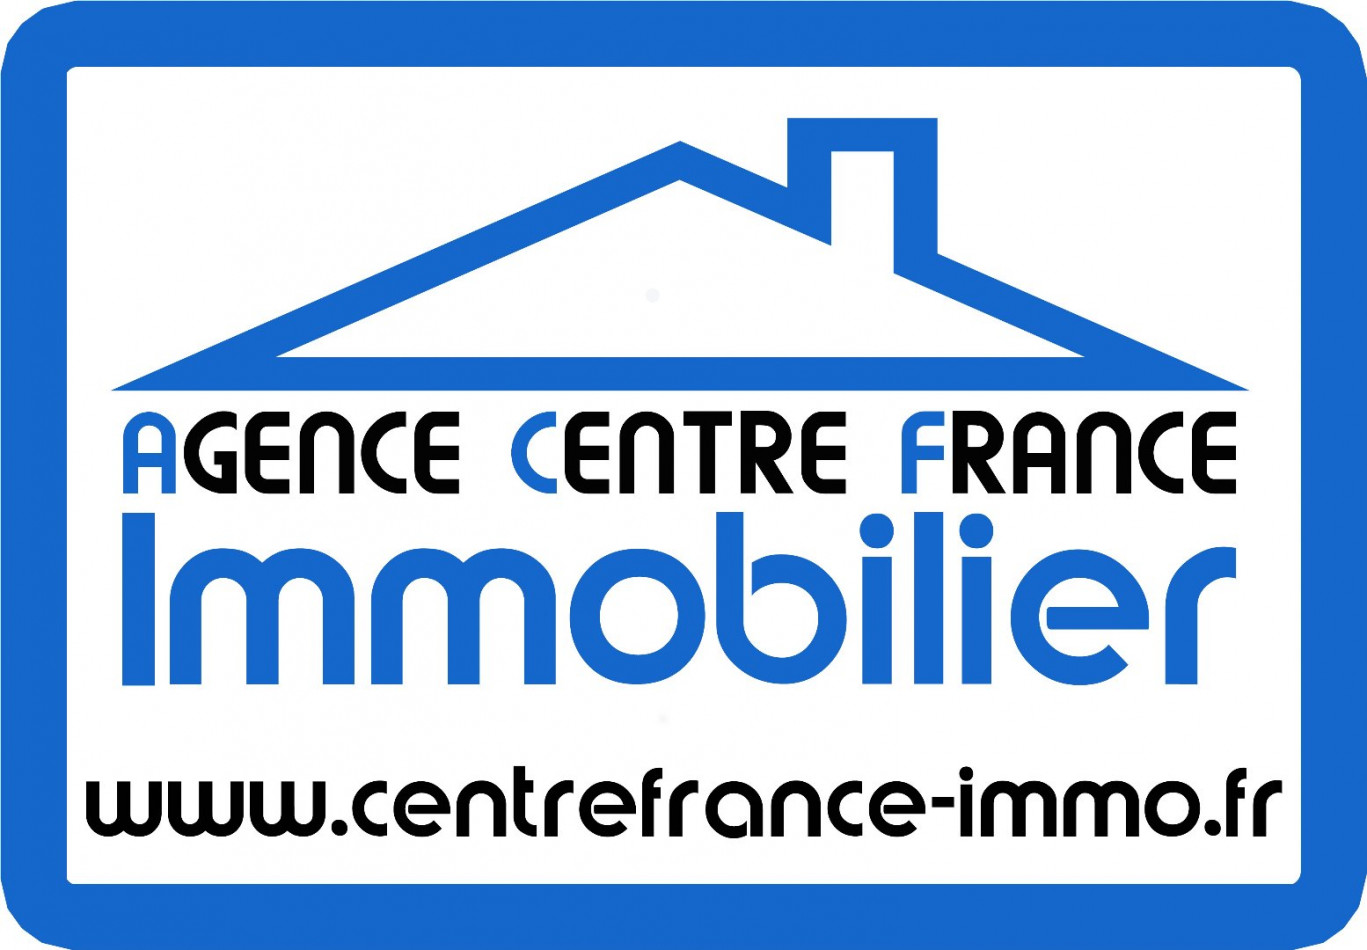 A vendre  Bourges | Réf 030011539 - Agence centre france immobilier